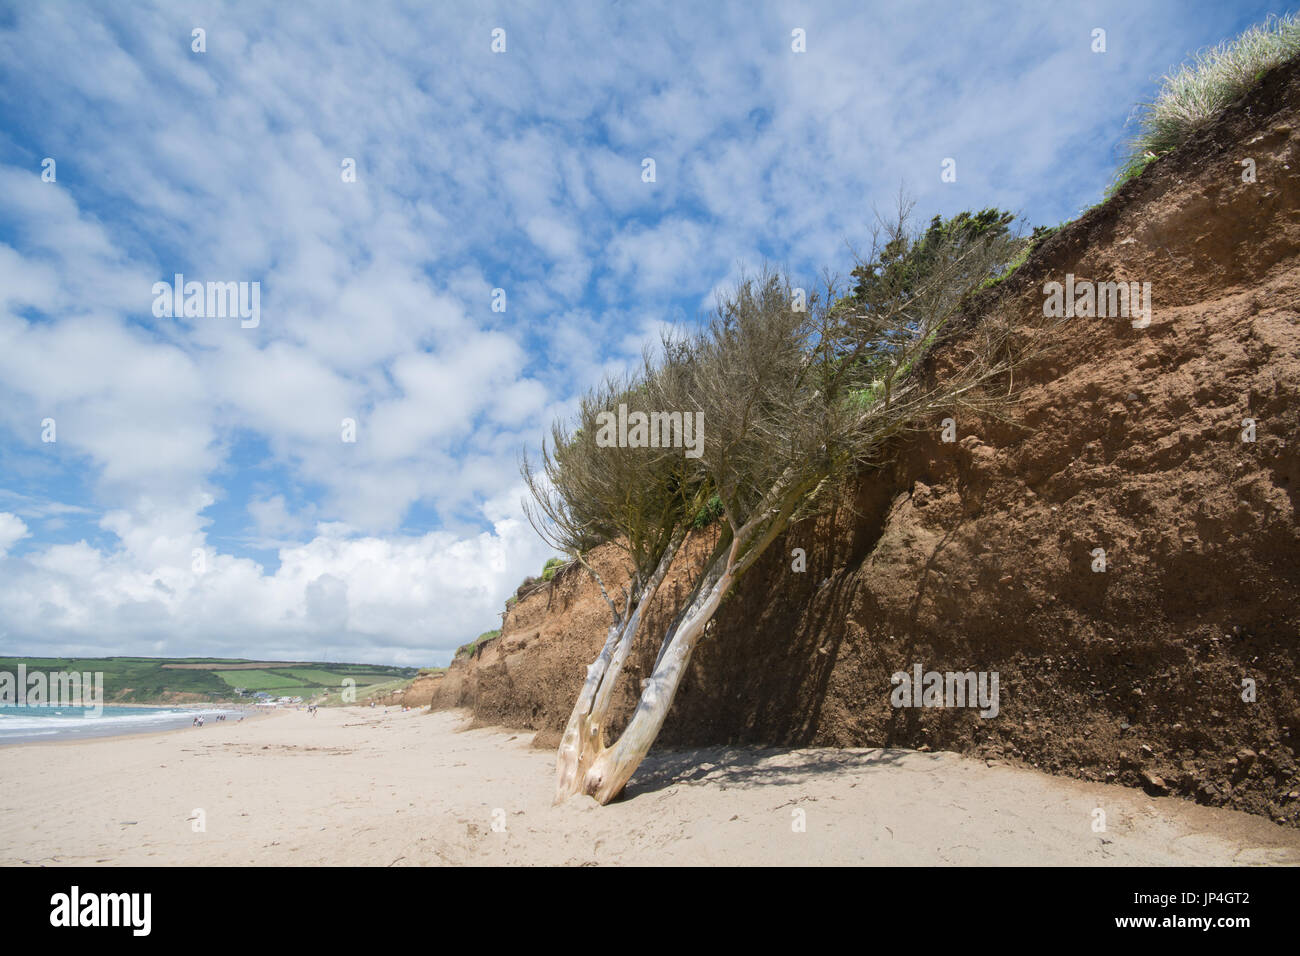 Tree that has slipped onto beach due to coastal erosion in Cornwall Stock Photo